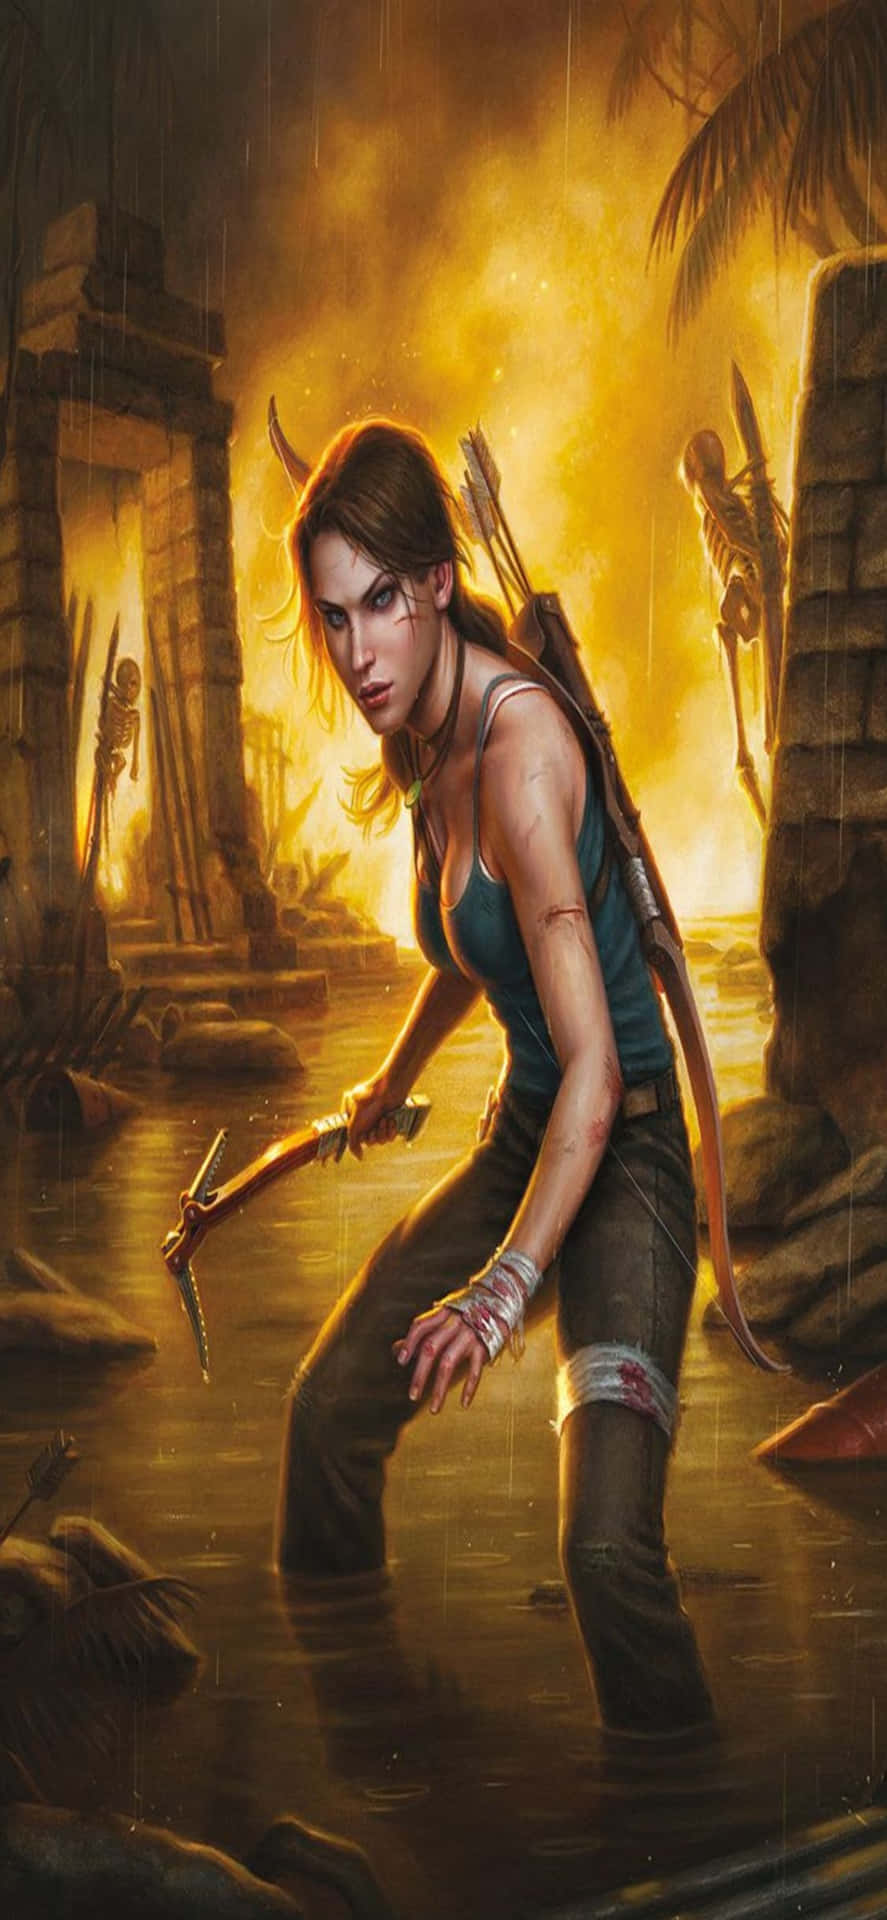 Exploreo Mundo Emocionante De Rise Of The Tomb Raider No Iphone X